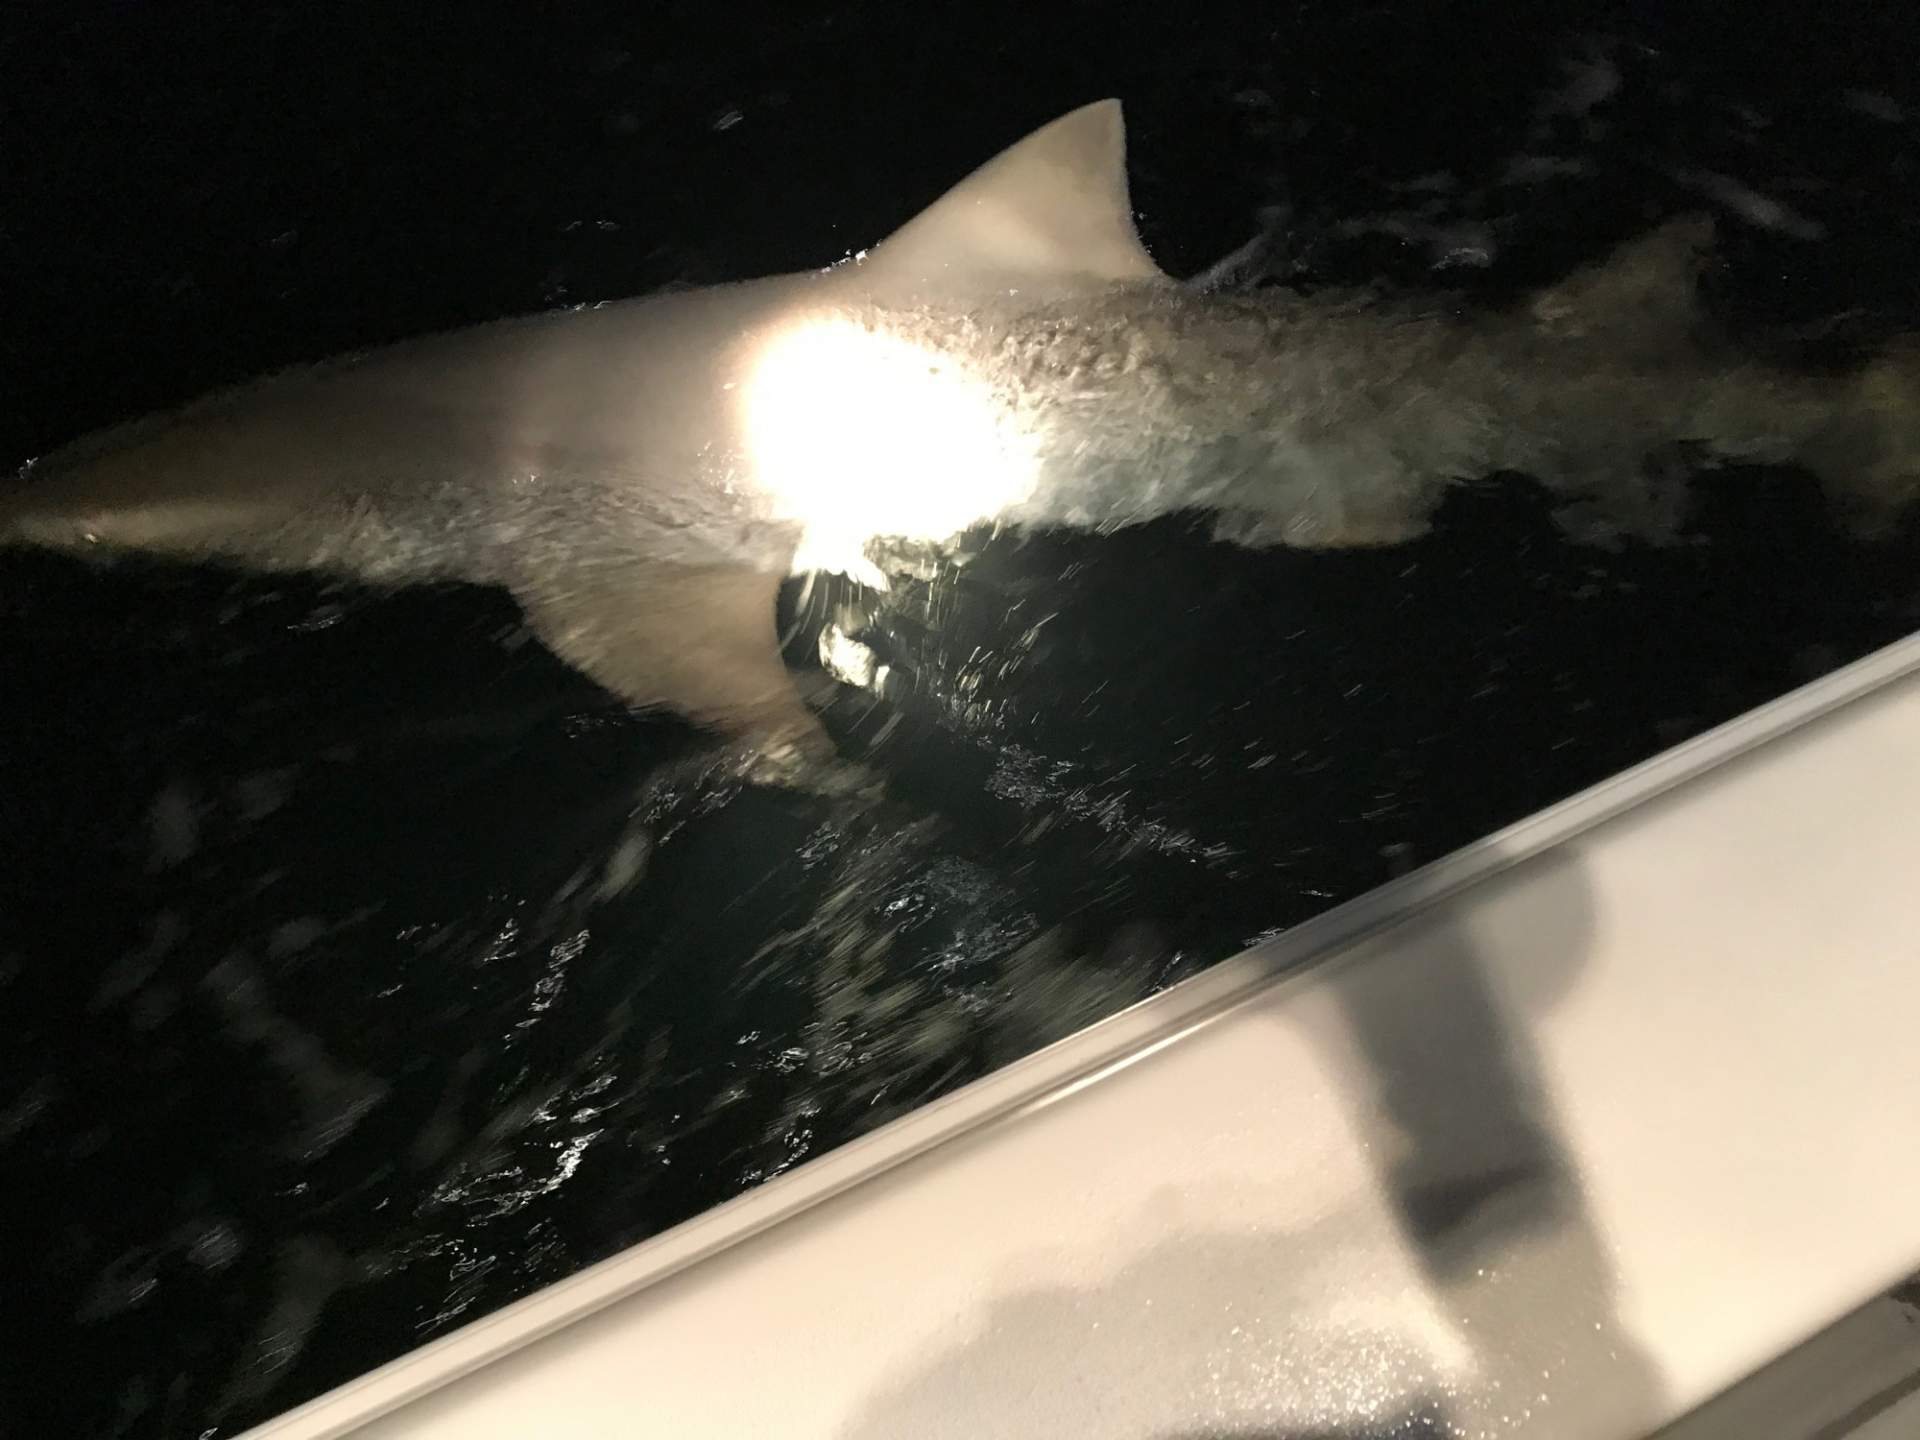 Shark in dark nighttime waters with light shining on it